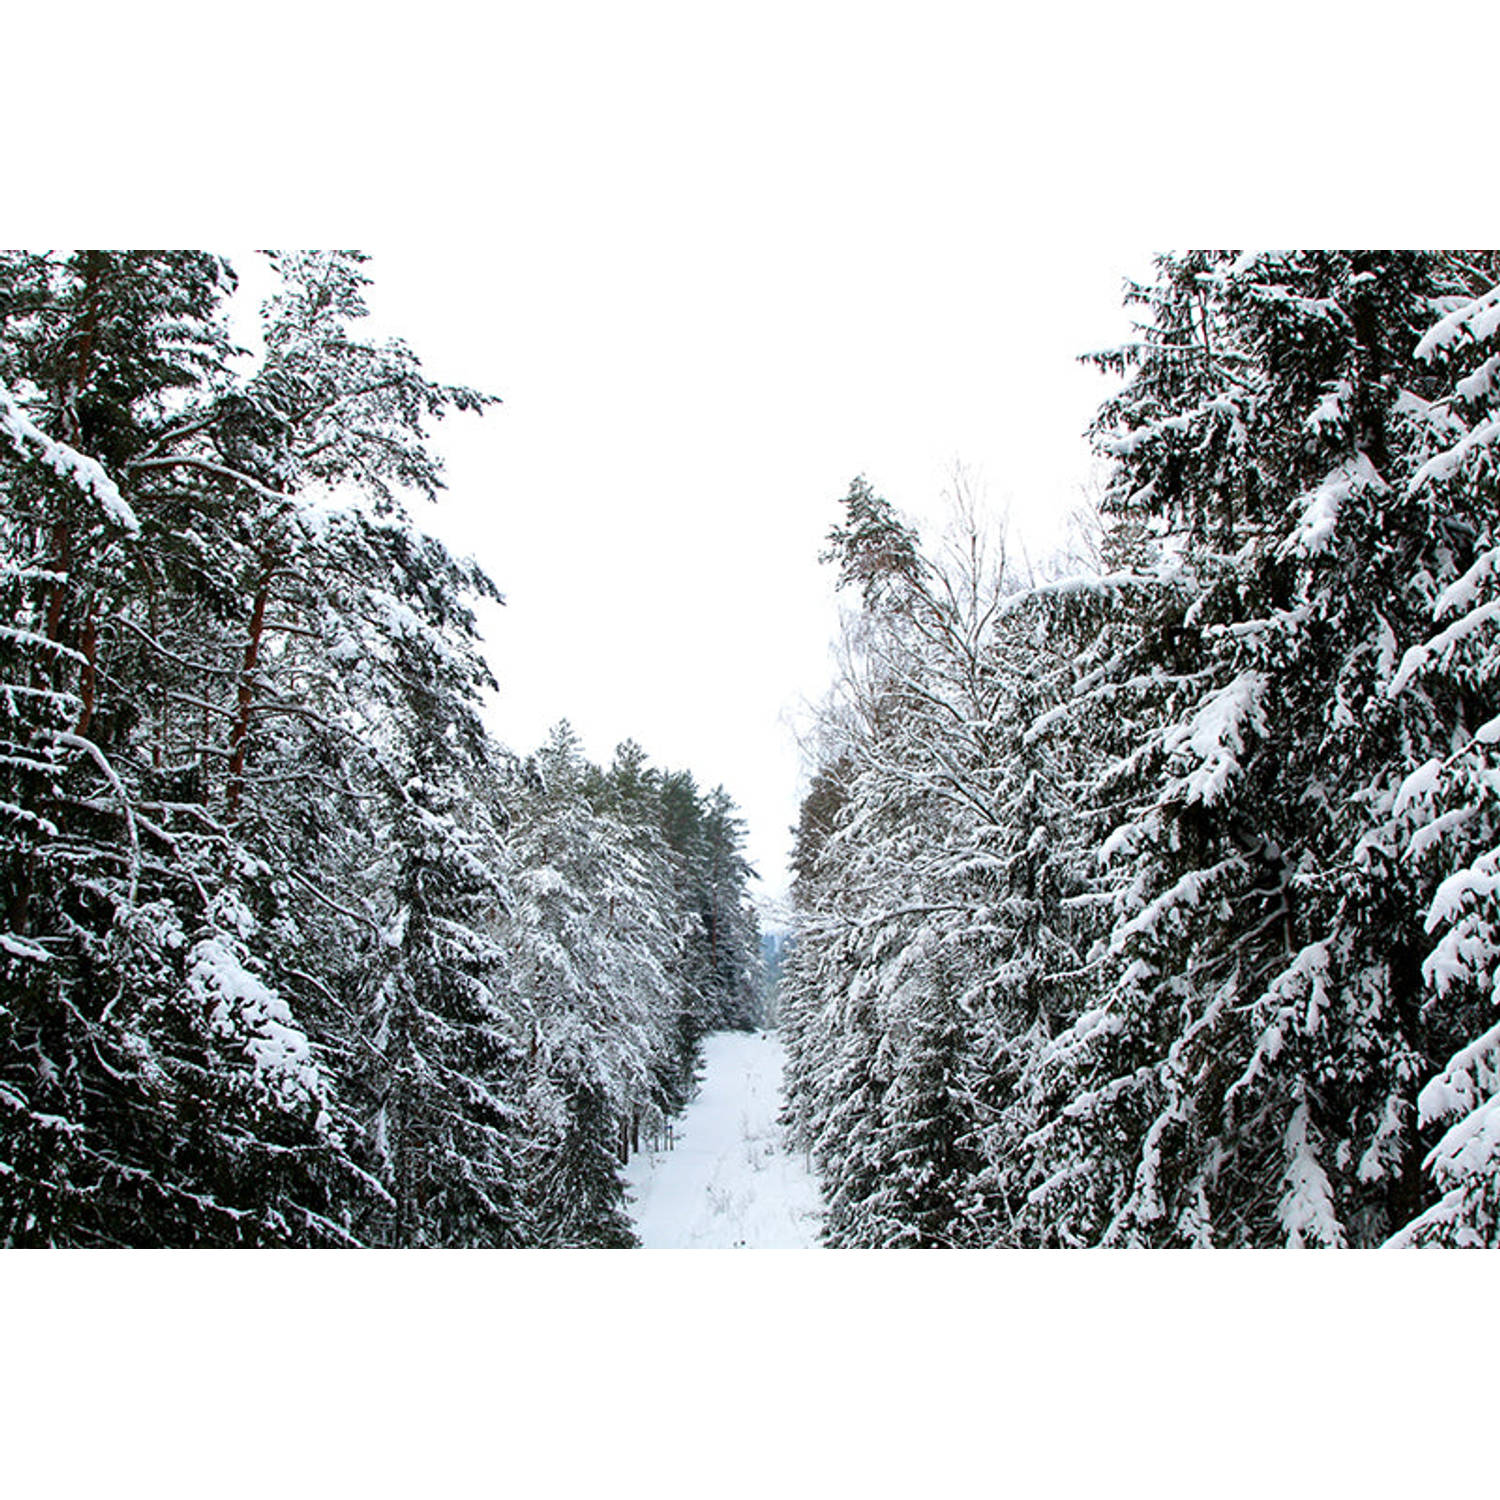 Inductiebeschermer - Snow road - 76x52 cm